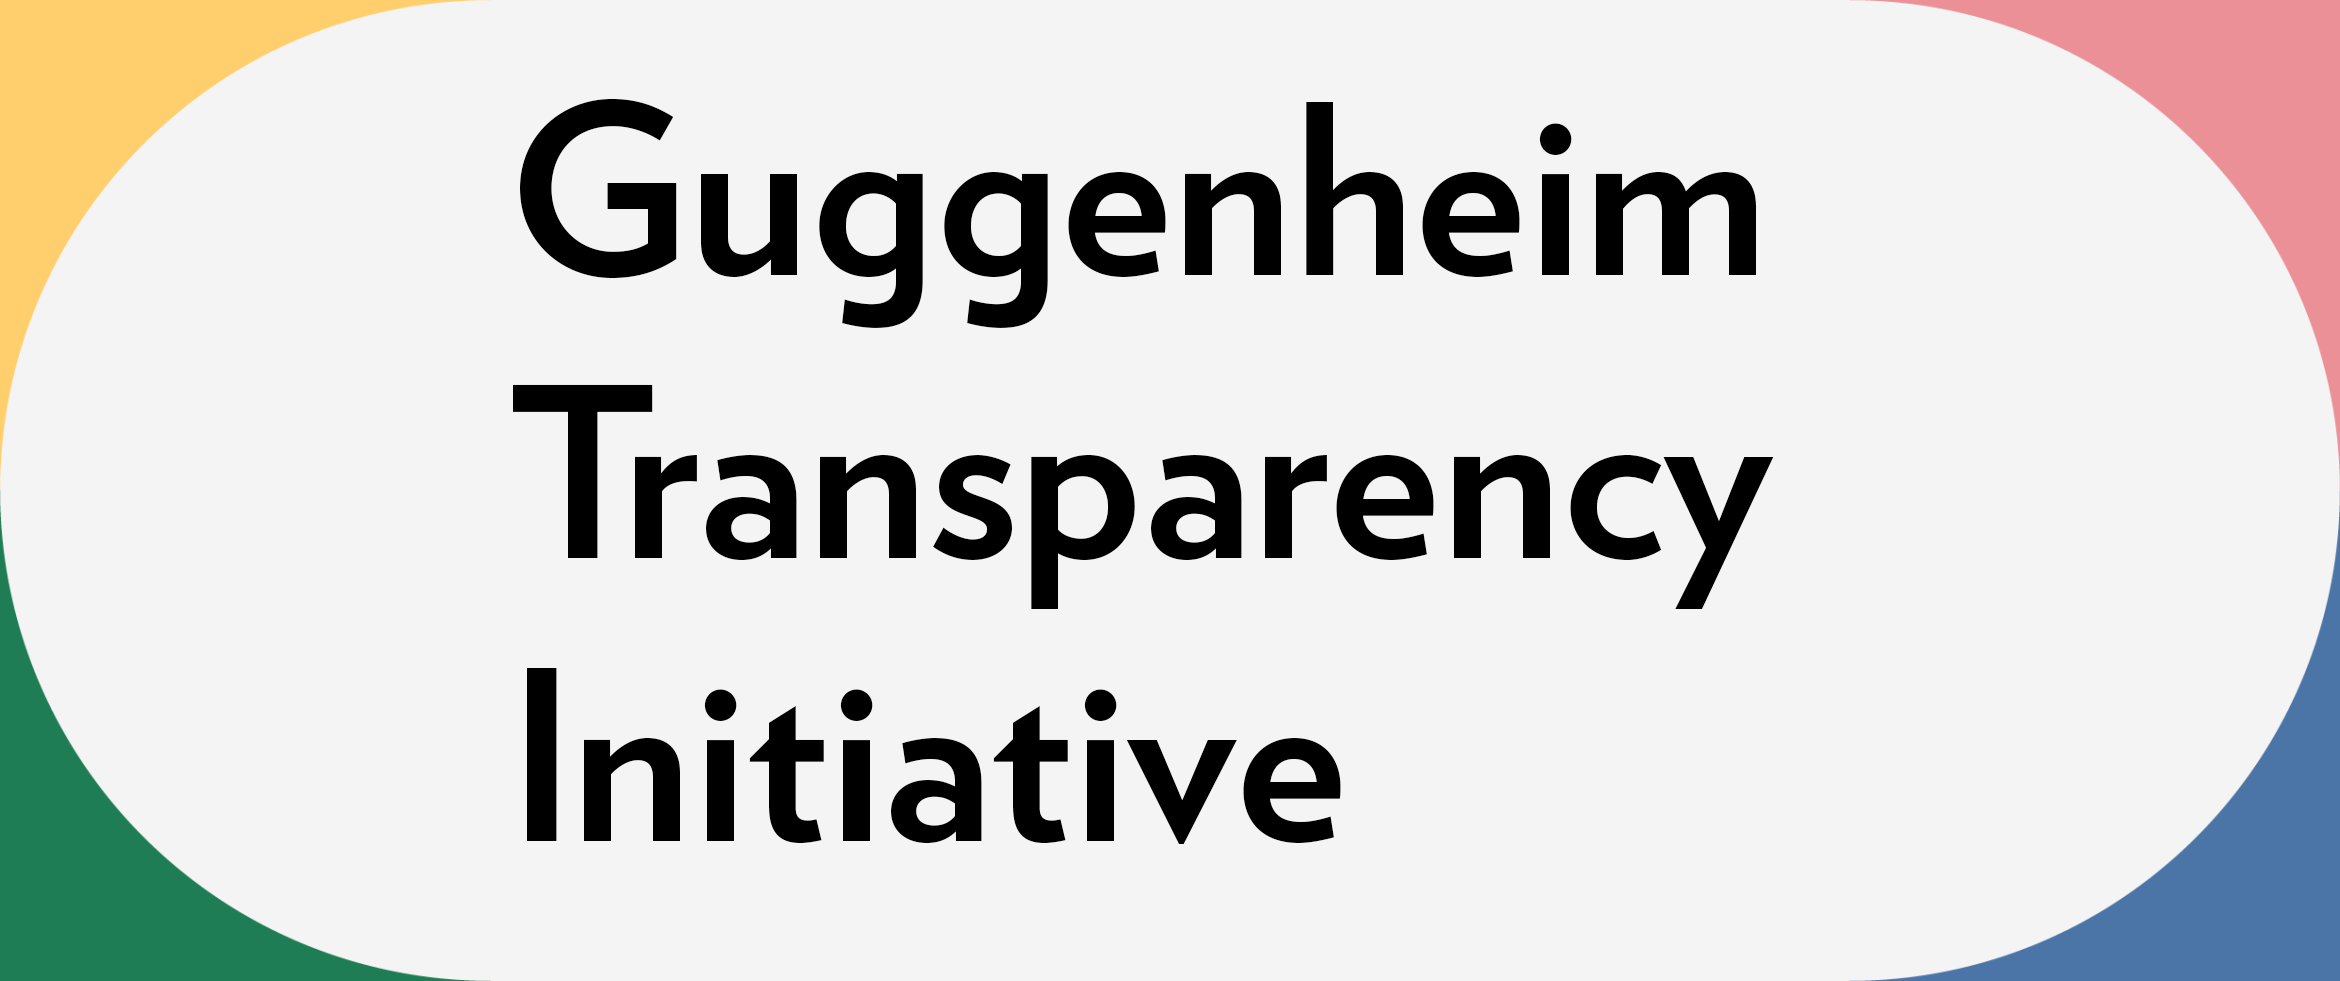 Guggenheim Transparency Inititiave